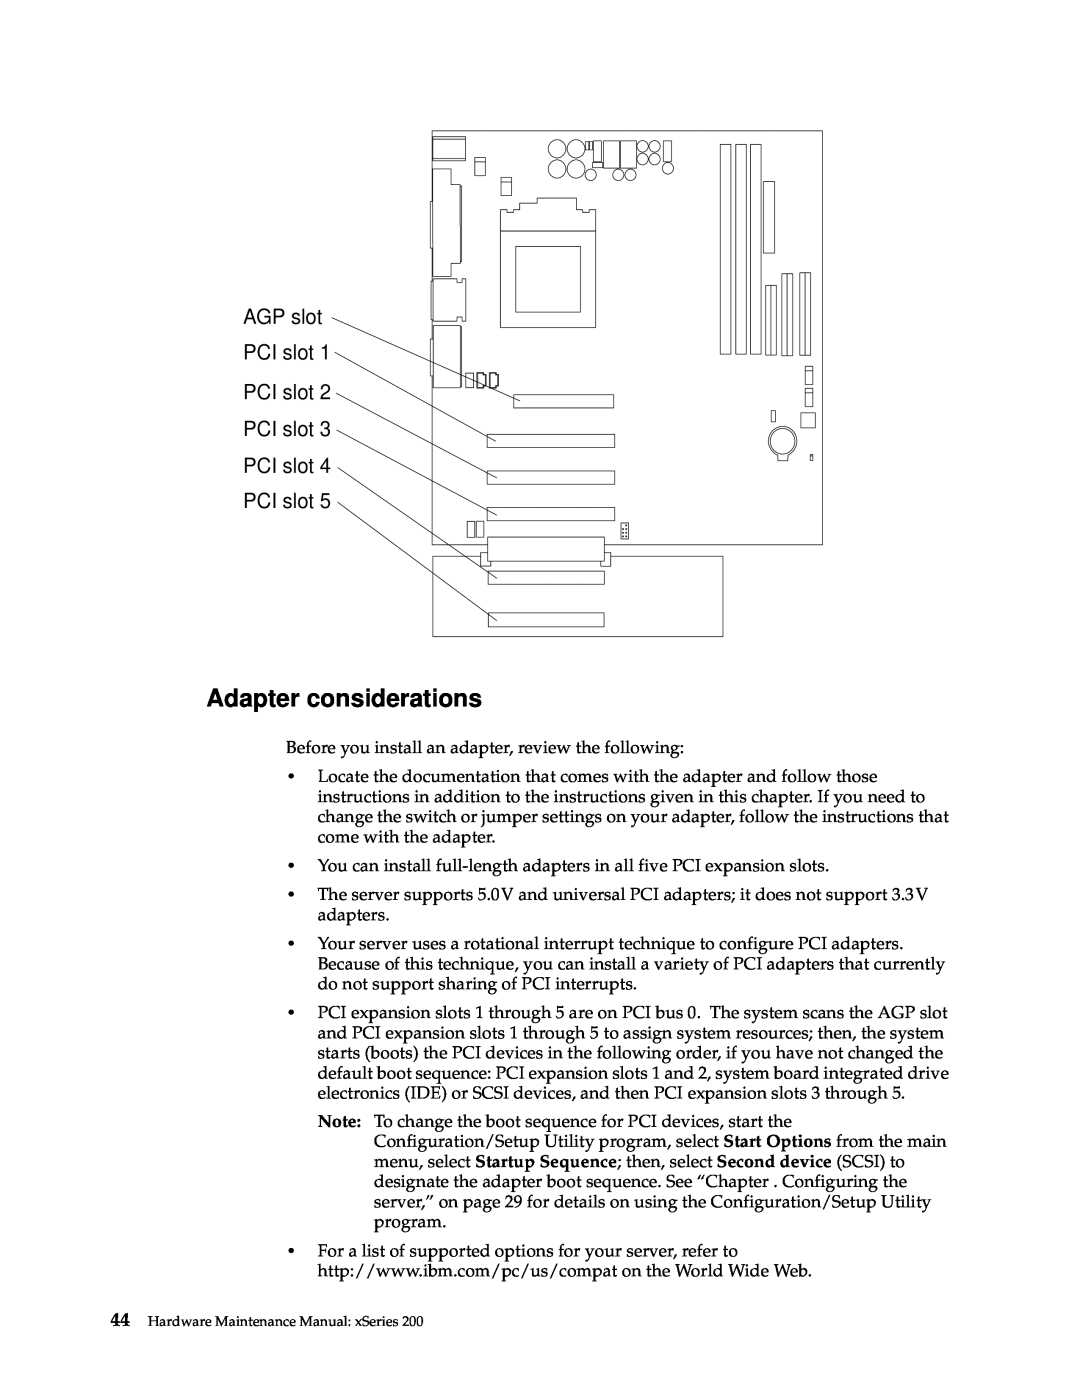 IBM x Series 200 manual Adapter considerations, AGP slot PCI slot PCI slot PCI slot PCI slot PCI slot 